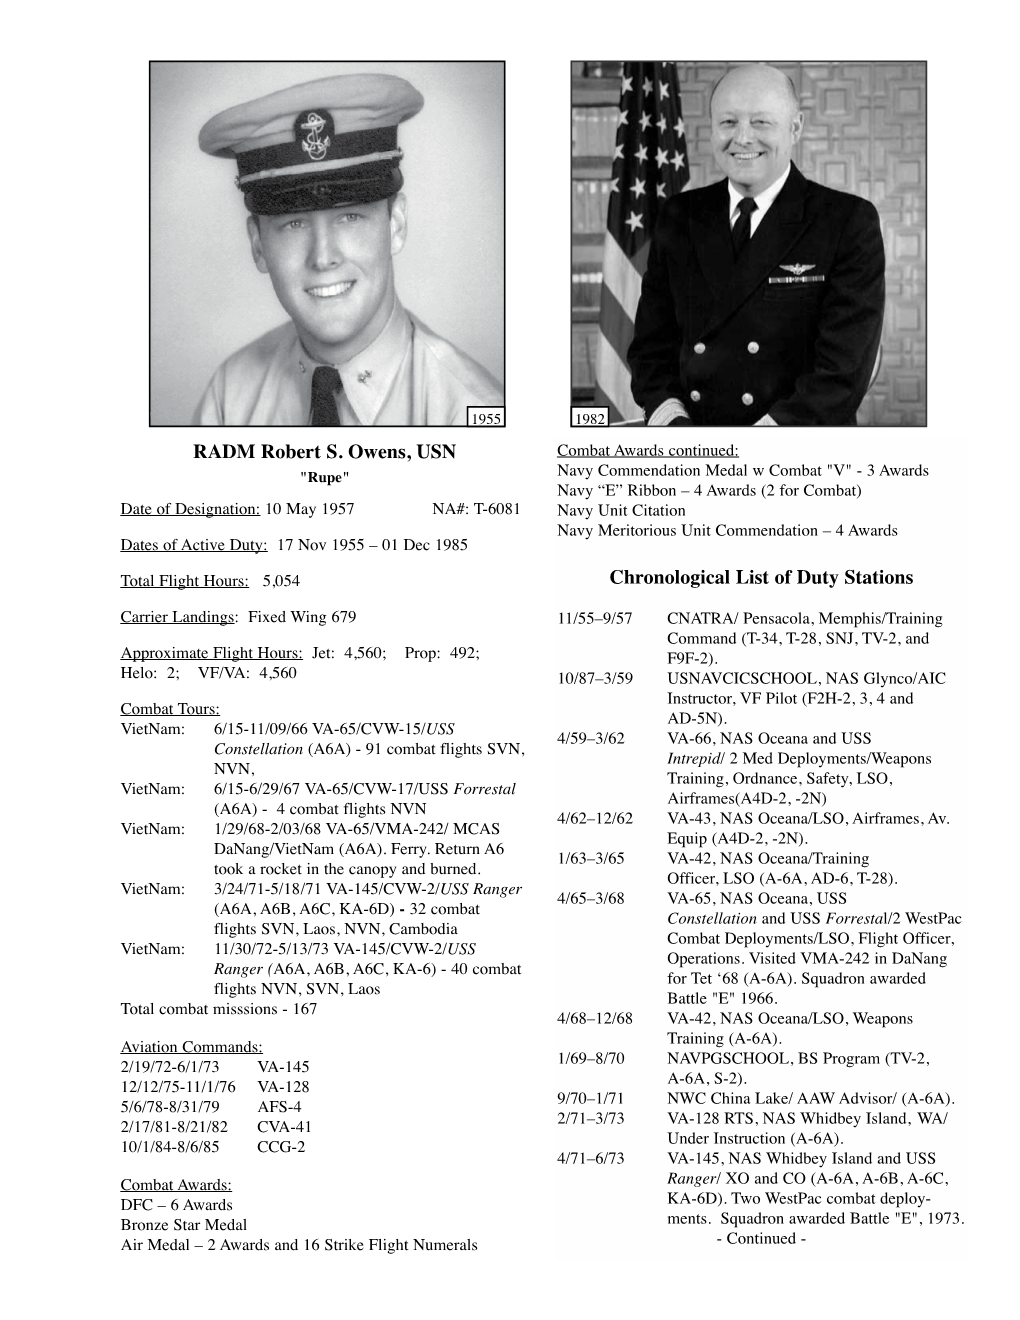 RADM Robert S. Owens, USN Chronological List of Duty Stations